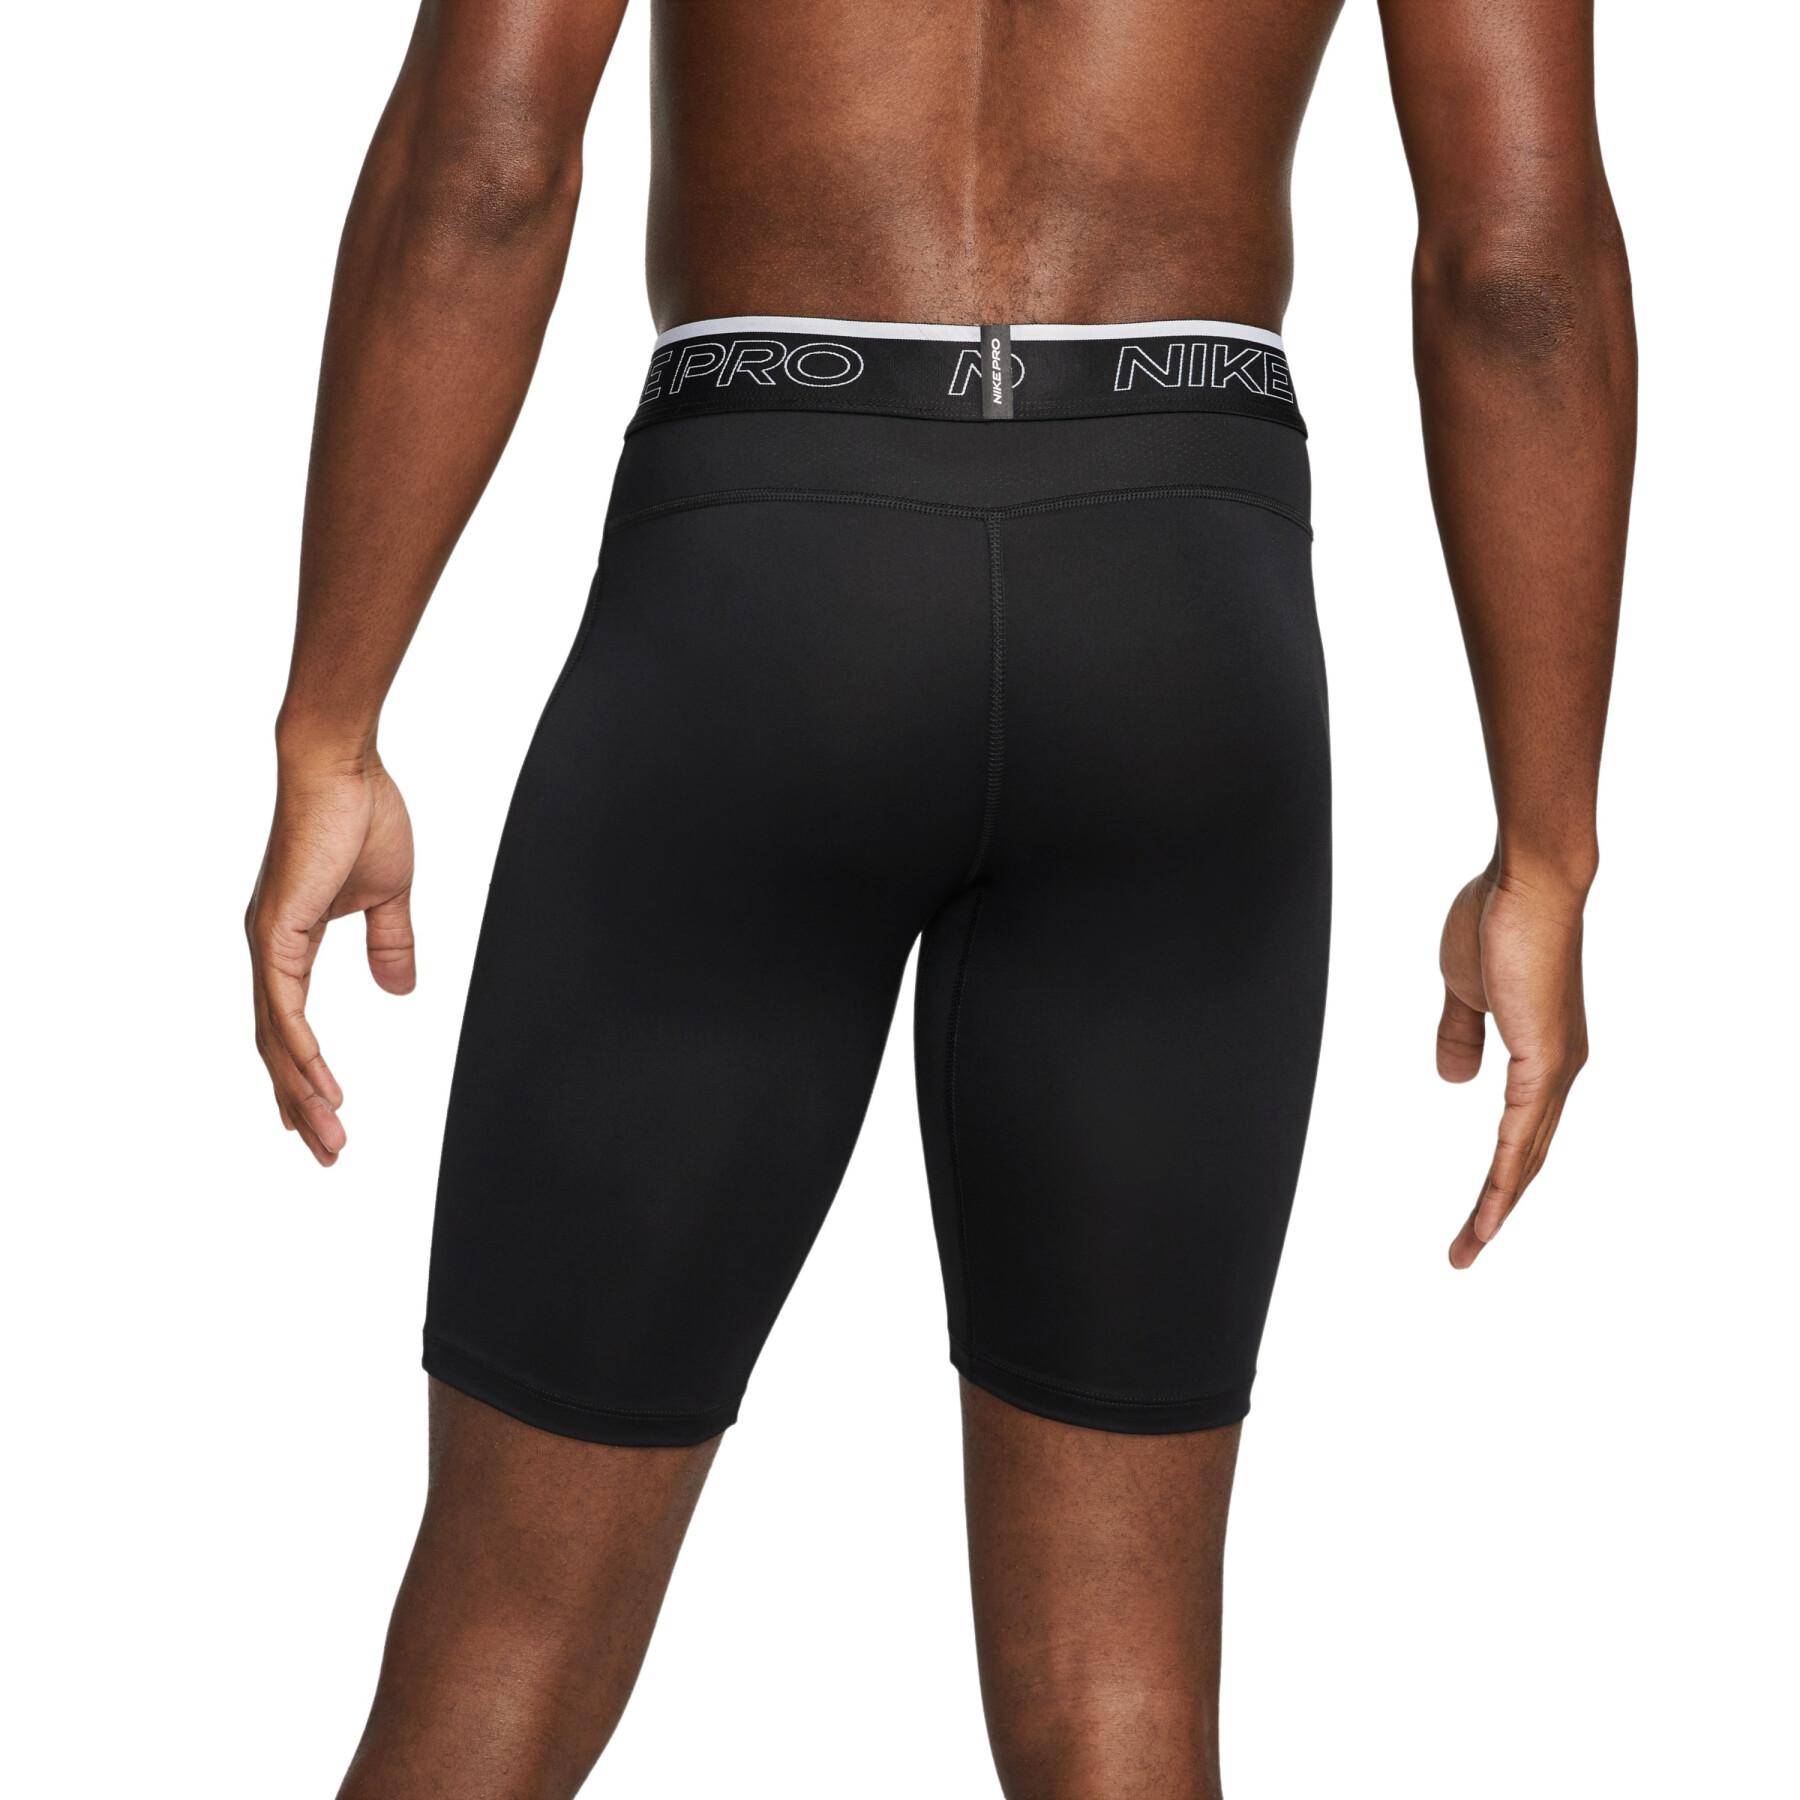 Long compression shorts Nike Dri-Fit